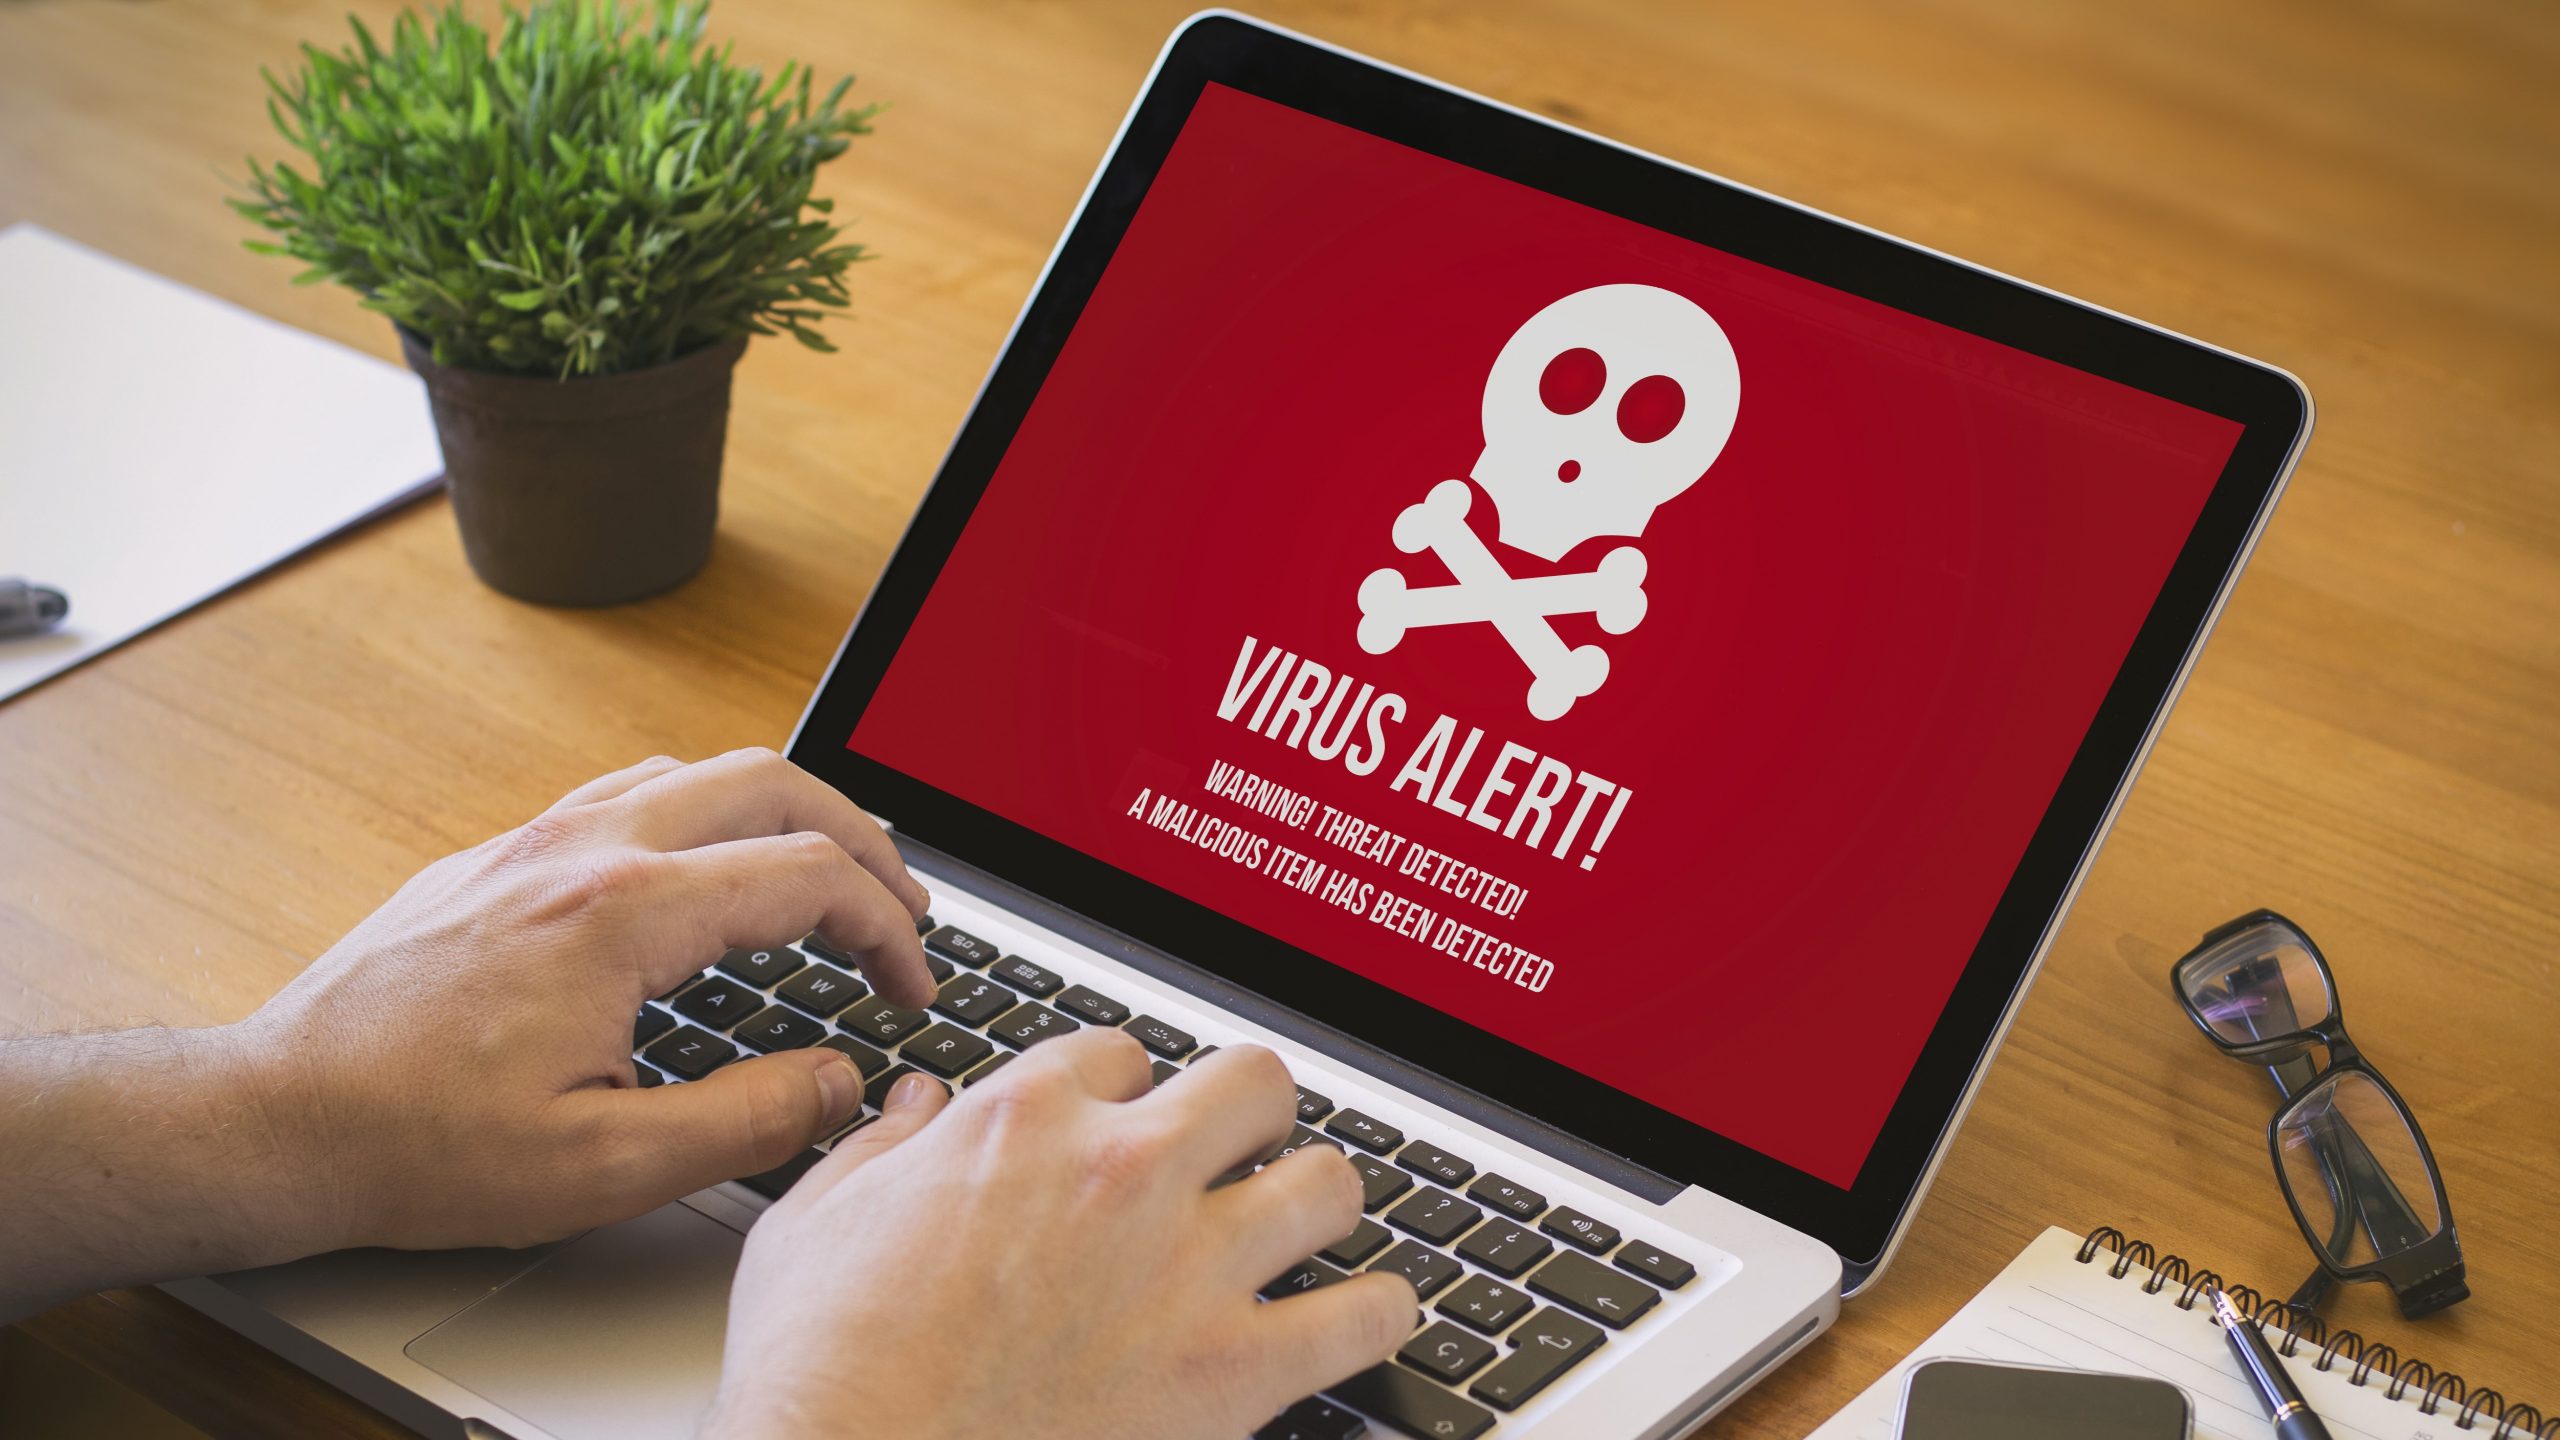 How do I get rid of malware and viruses?